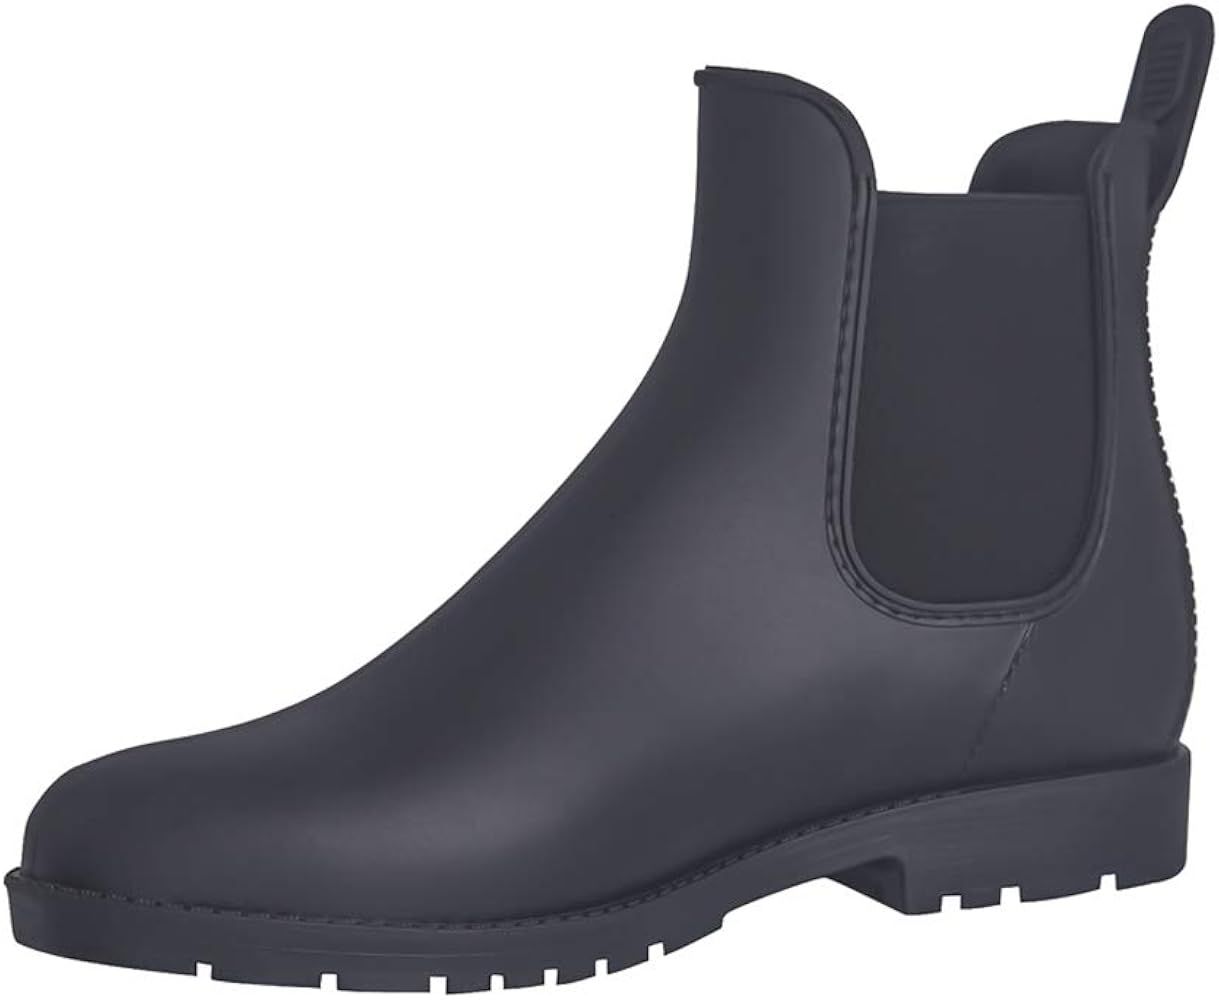 Chelsea Rain Boots for Women - Fashion Elastic Rubber Ankle Rain Footwear, Waterproof Non-Slip Sh... | Amazon (US)